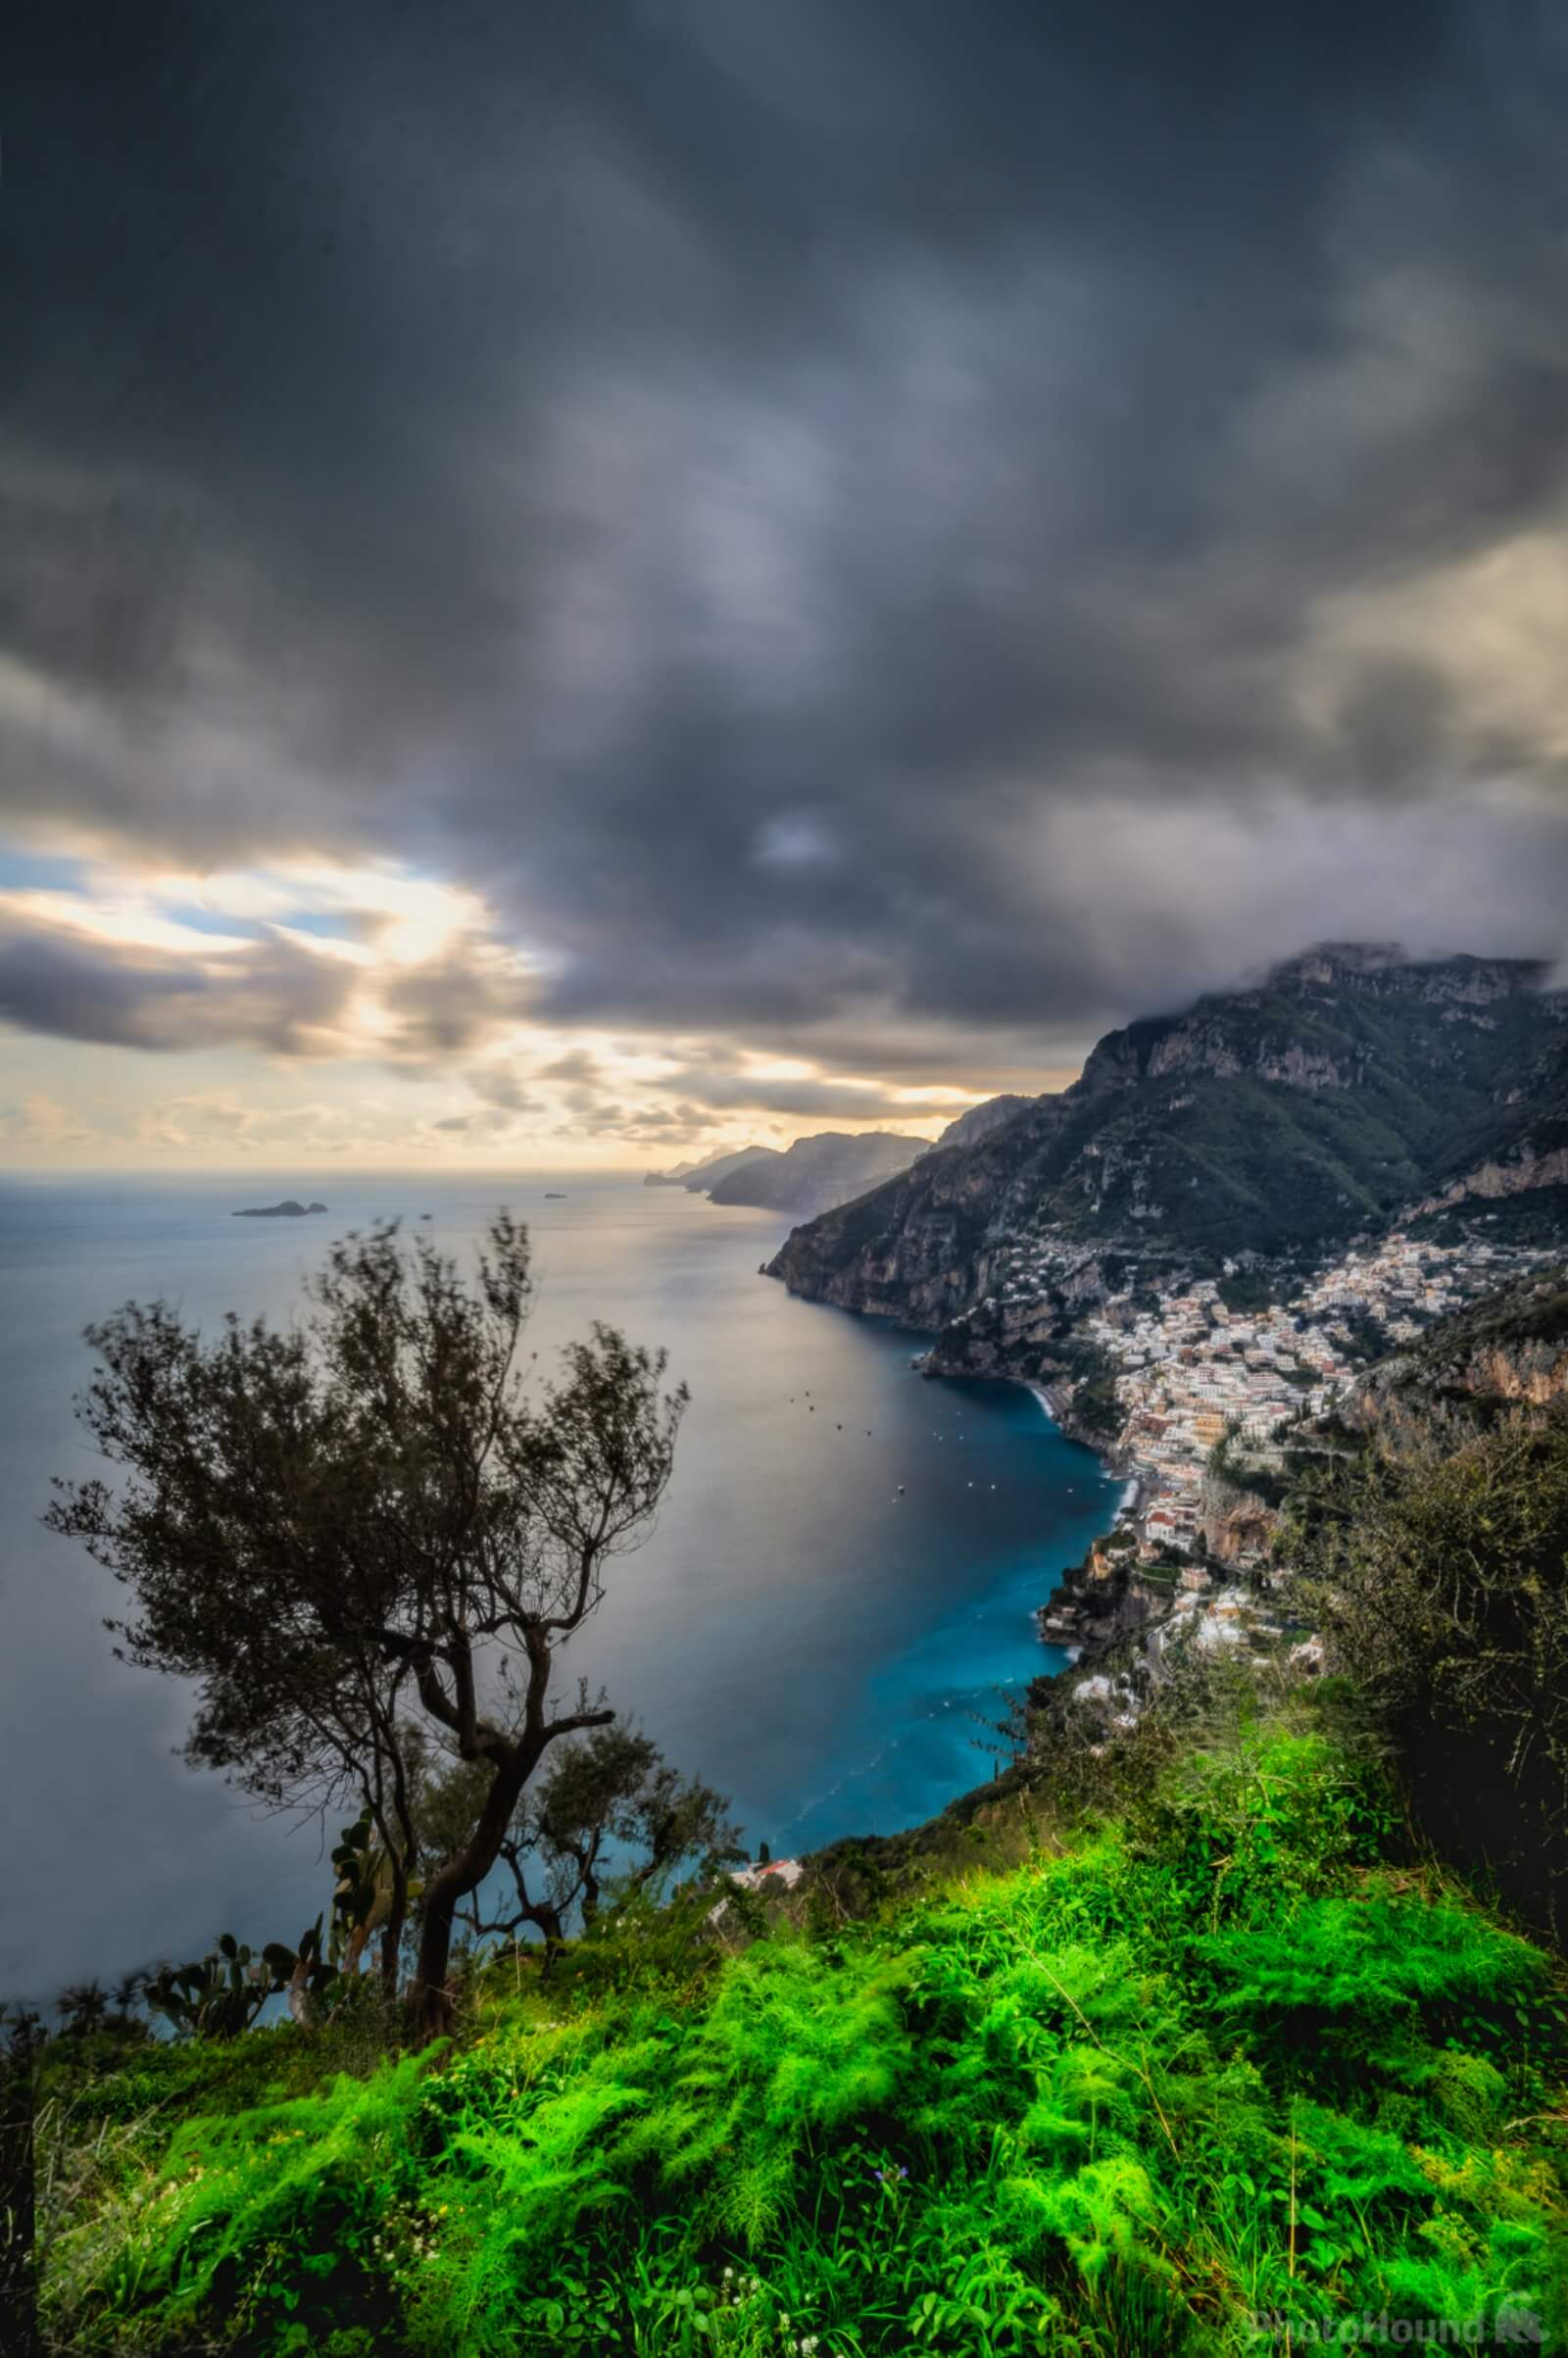 Image of Sentiero degli Dei – Gods’ Pathway – Viewpoint over Positano by Raimondo Giamberduca